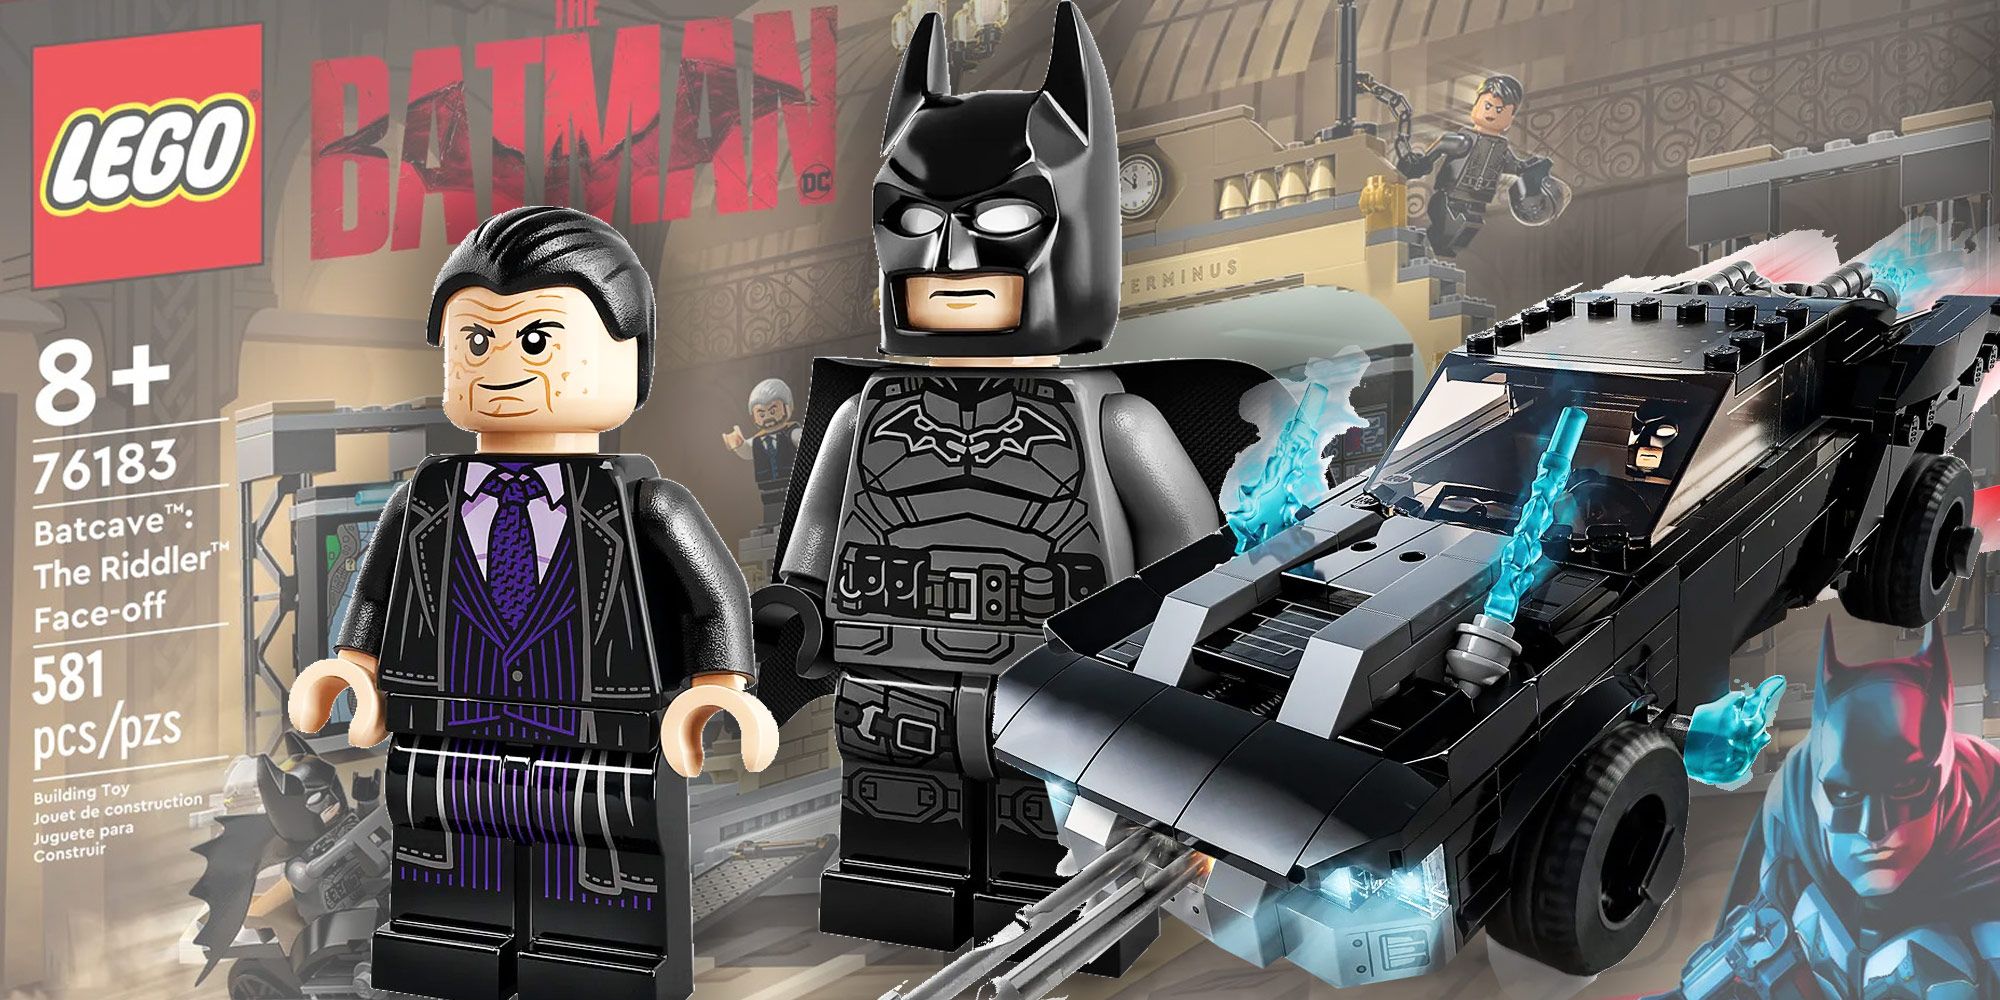 The next wave of LEGO Batman Movie sets revealed [News] - The